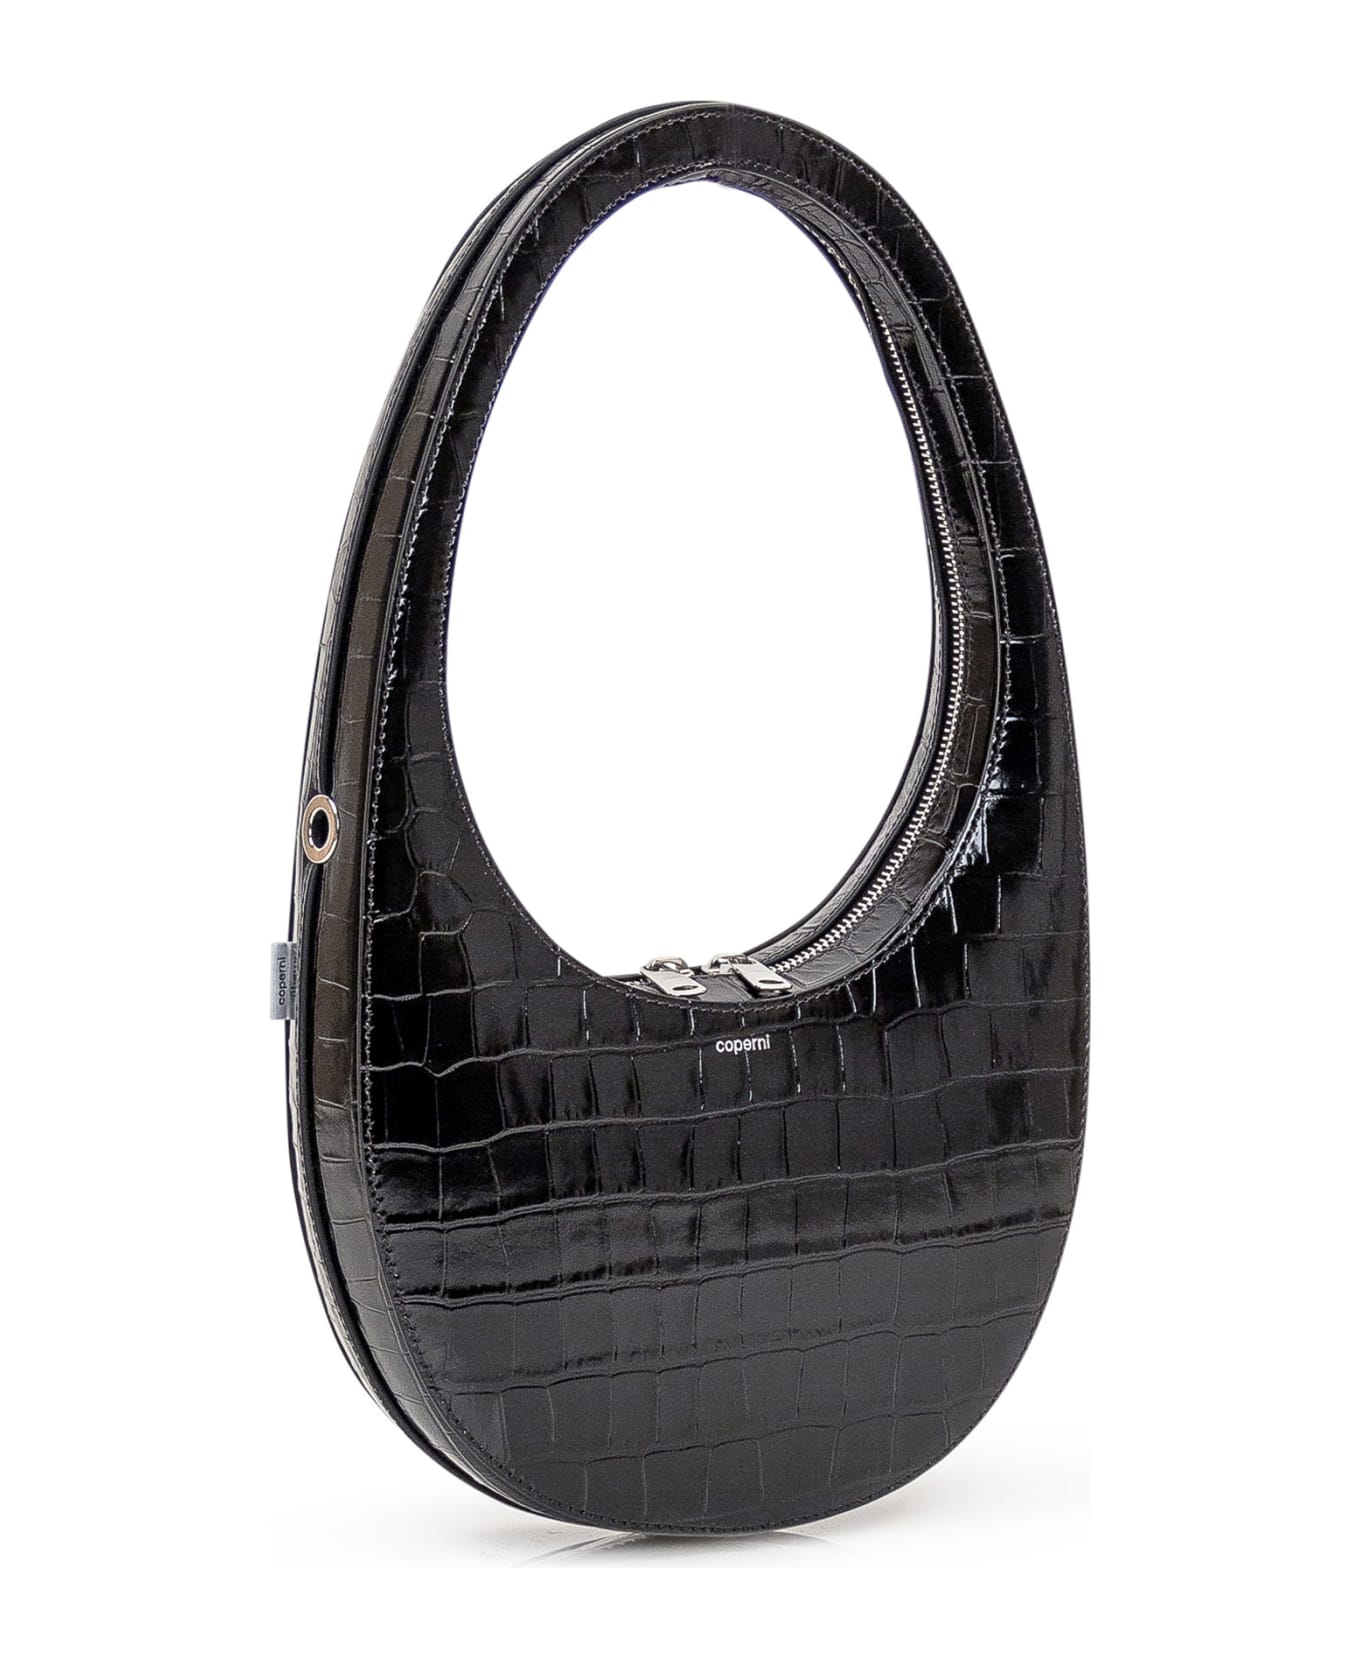 Coperni Swipe Bag - BLACK トートバッグ